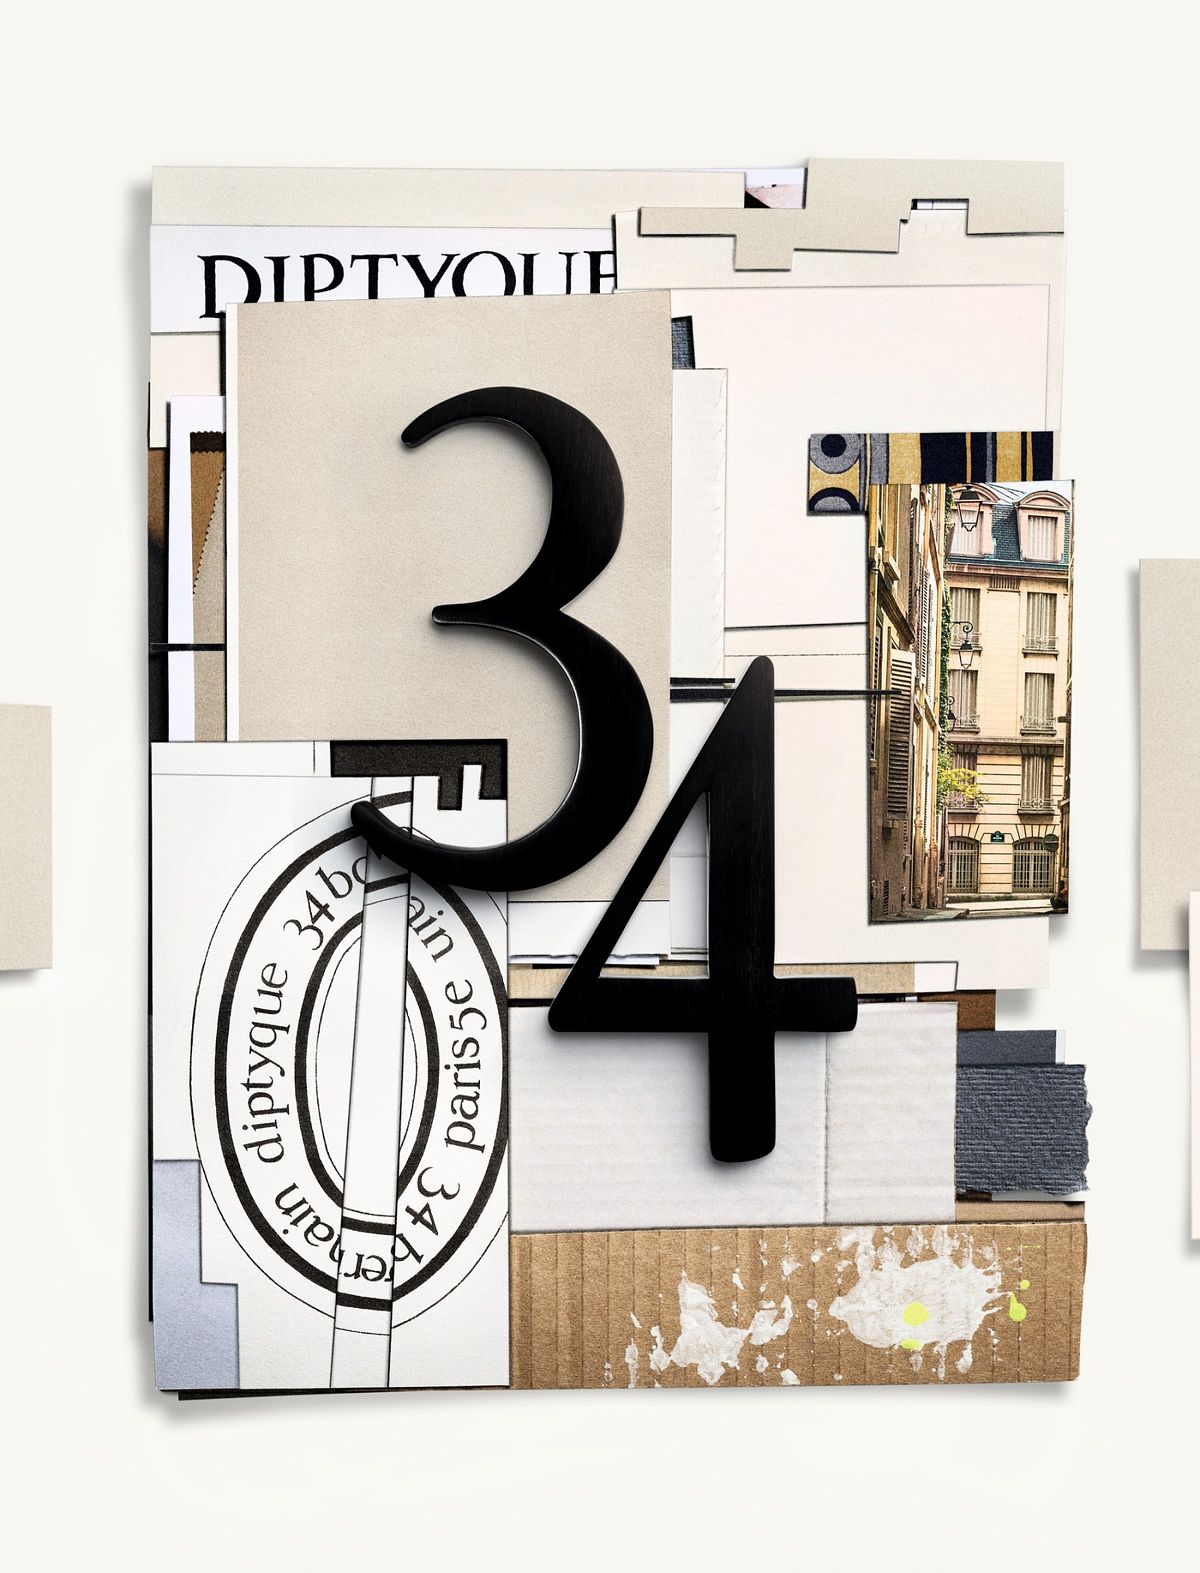 Diptyque「圣日尔曼大道34号系列」凝聚世界各地的嗅觉灵魂与精神，将生活之艺带入千家万户！